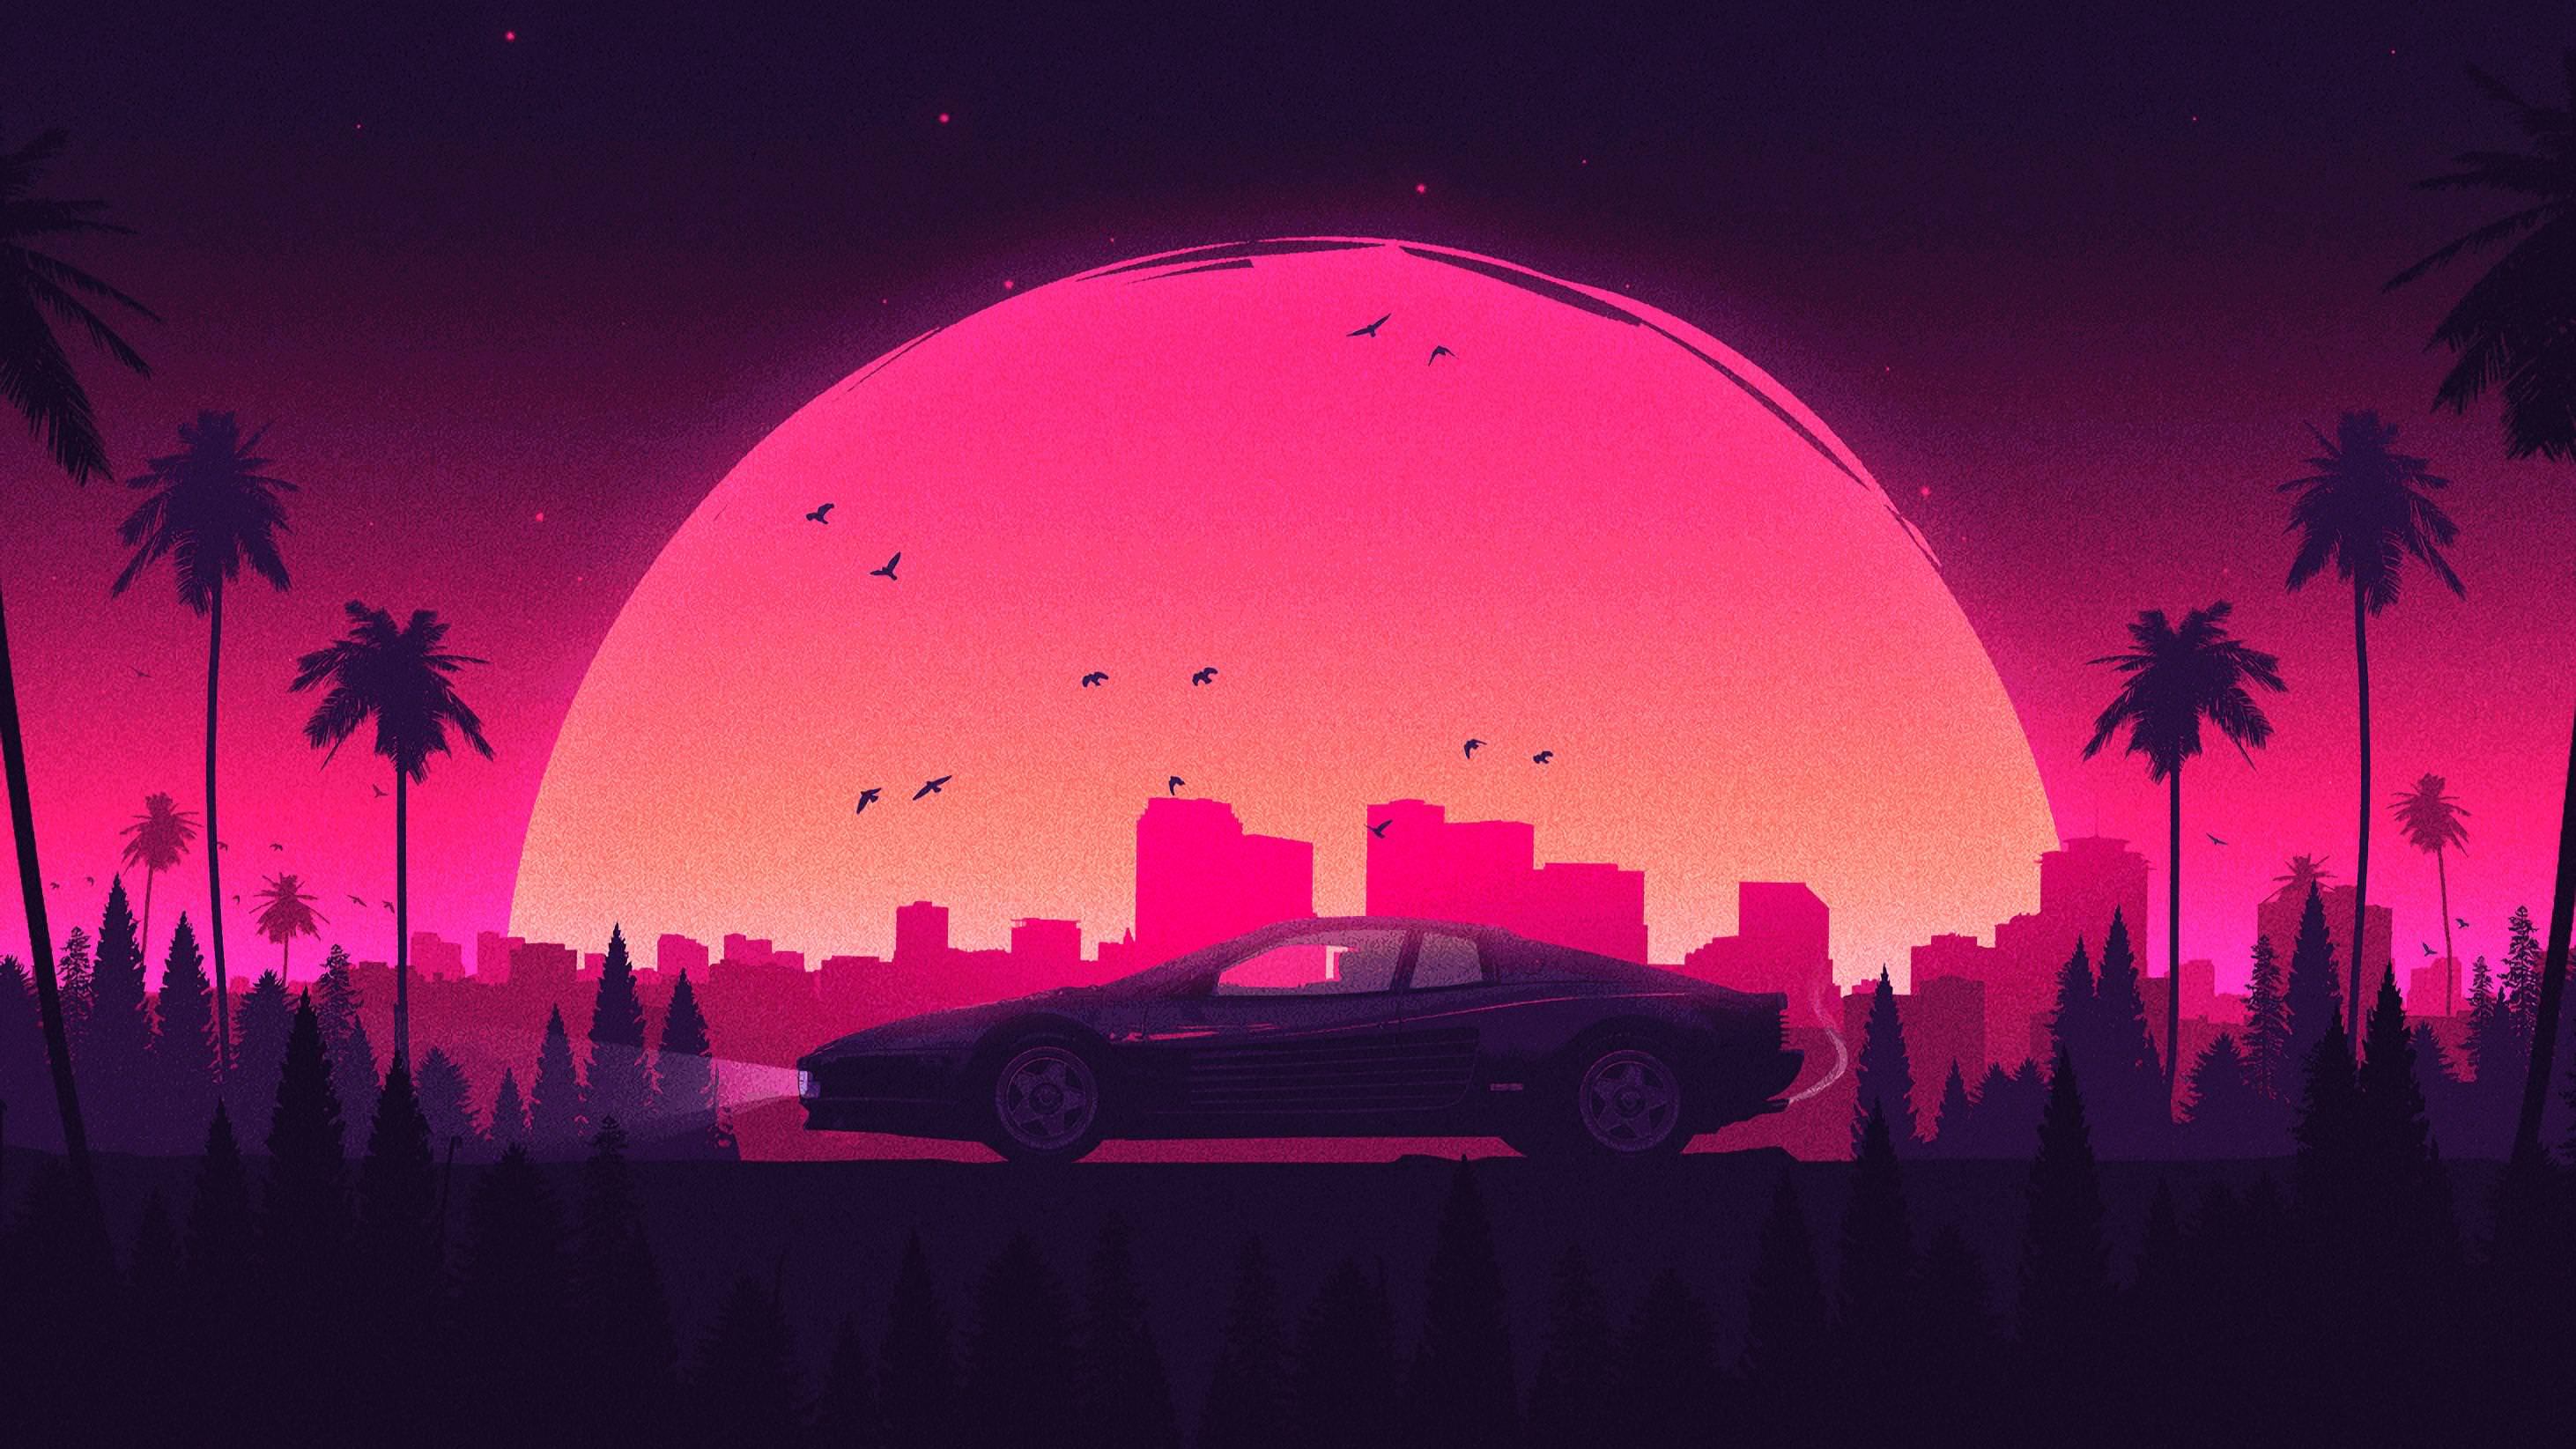 Pink Retro City Lamborghini, HD Artist, 4k Wallpaper, Image, Background, Photo and Picture